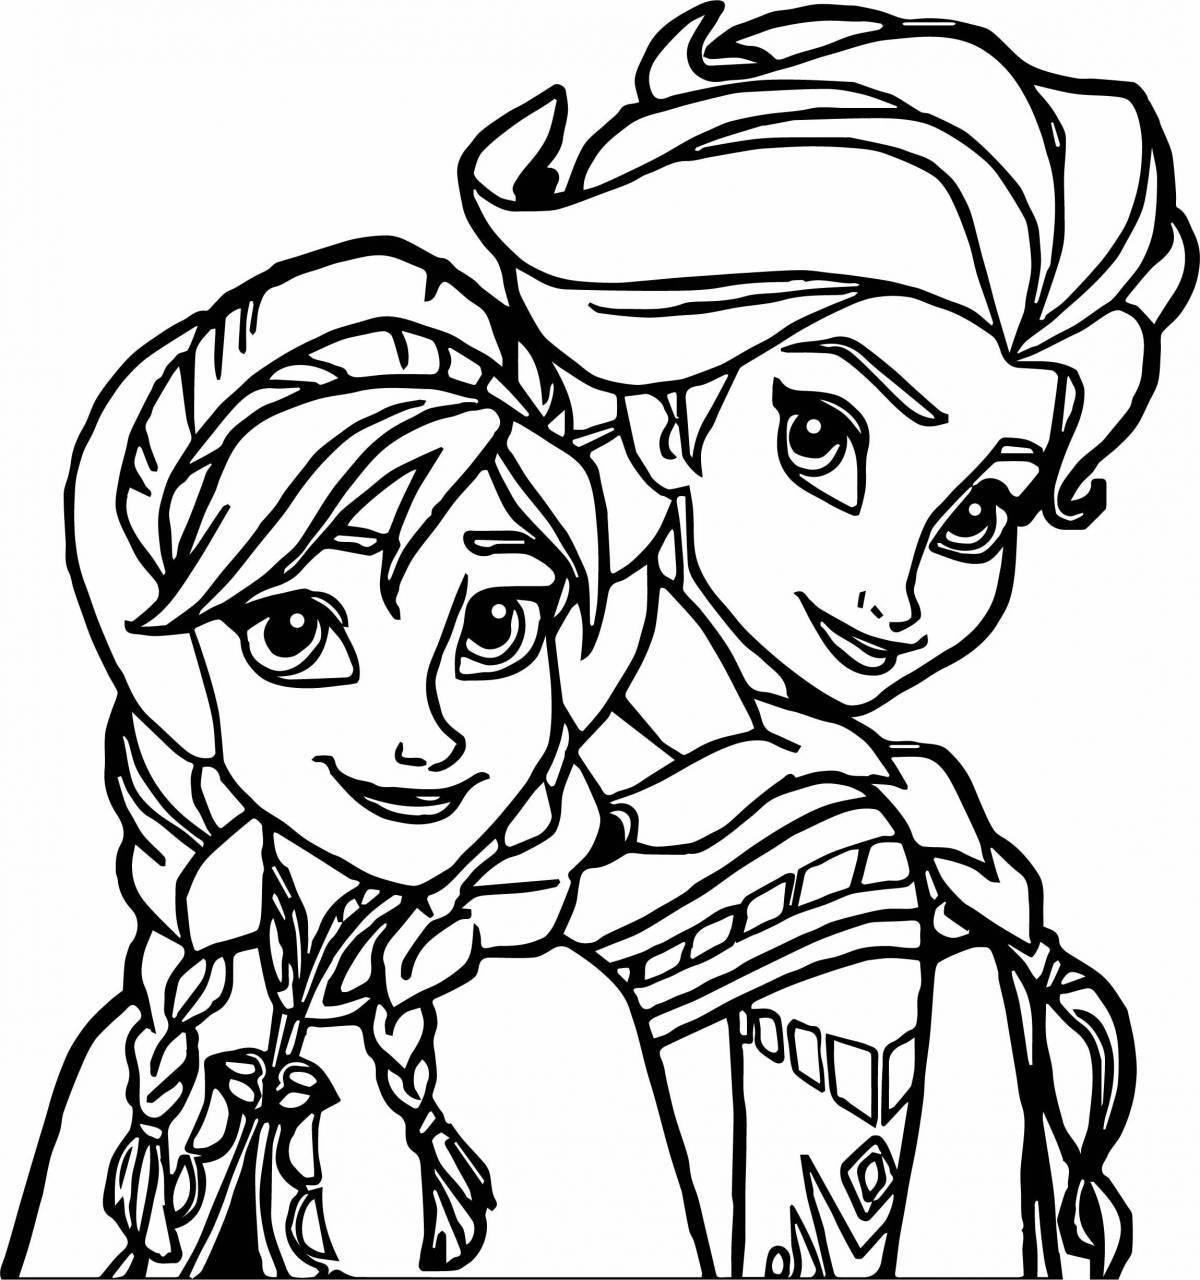 Elsa and anna shining coloring book